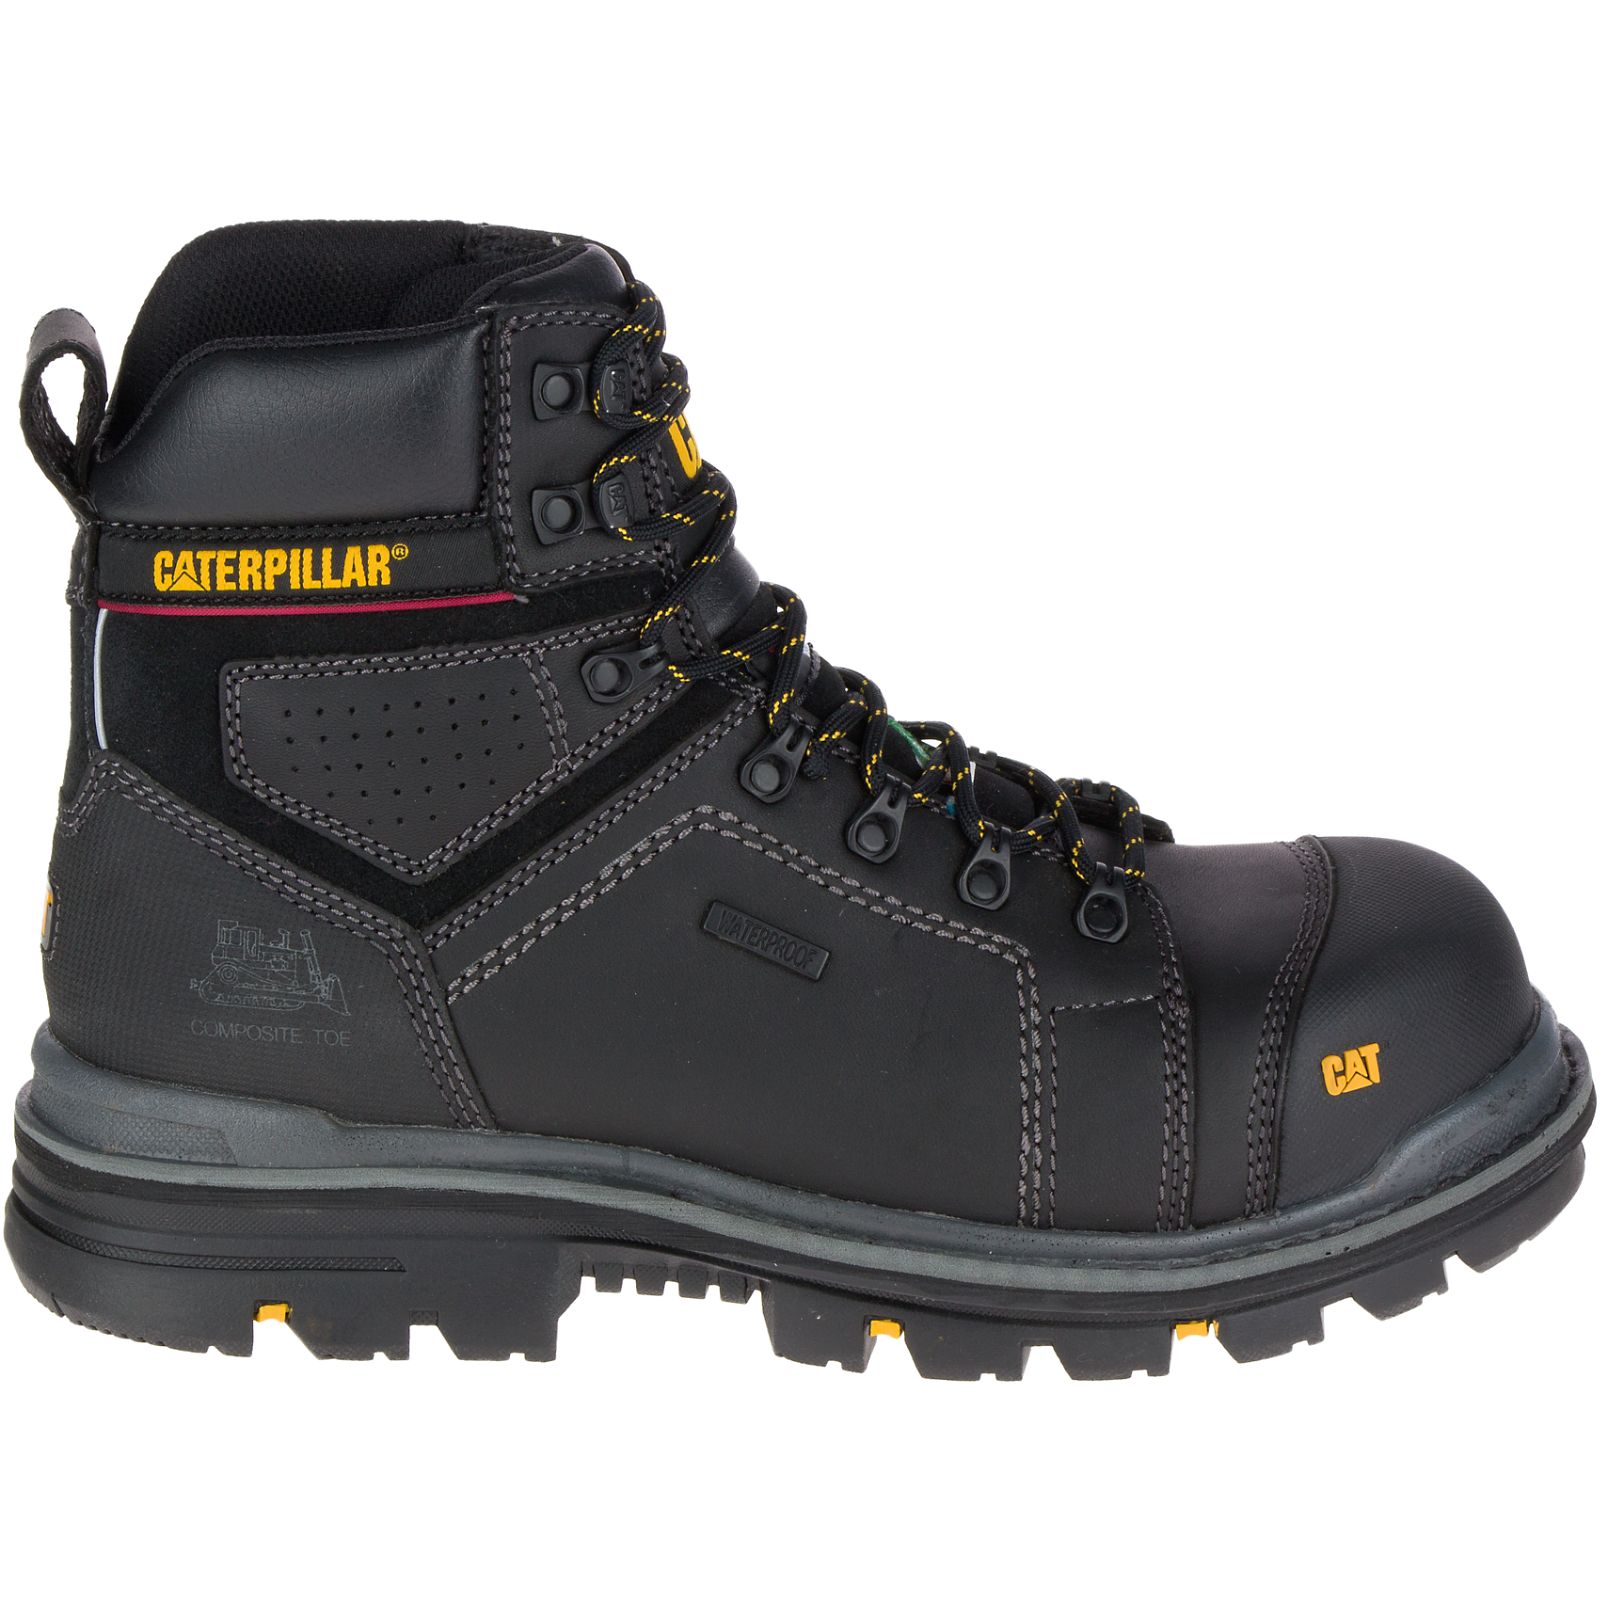 Caterpillar Hauler 6" Waterproof Composite Toe Philippines - Mens Work Boots - Black 92386MPTY